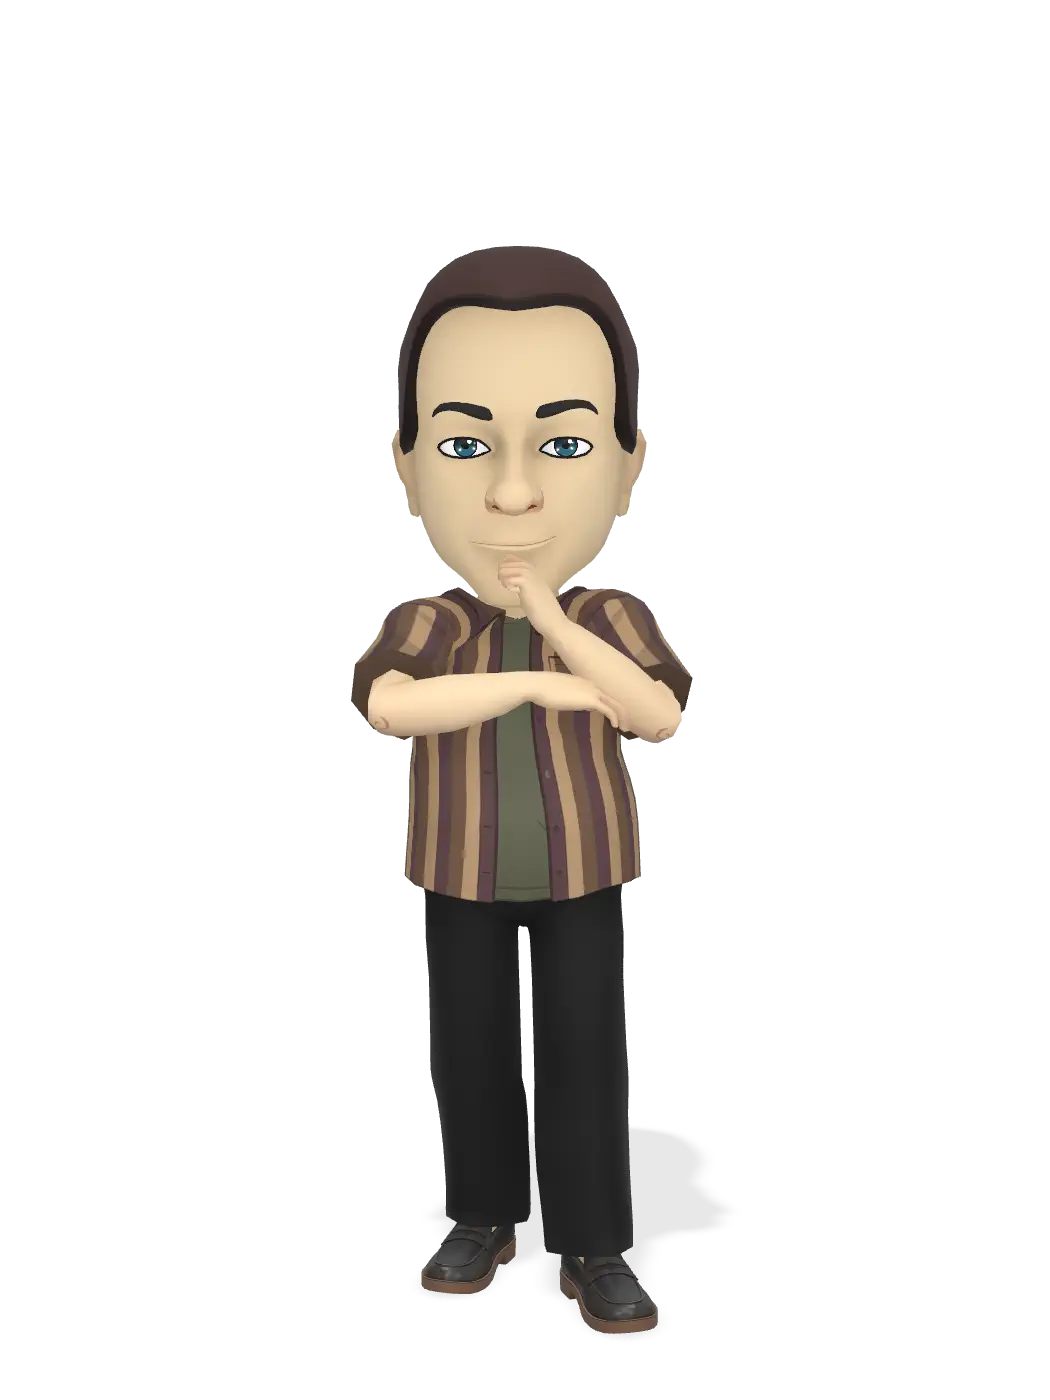 3D Bitmoji for jbush2001 avatar